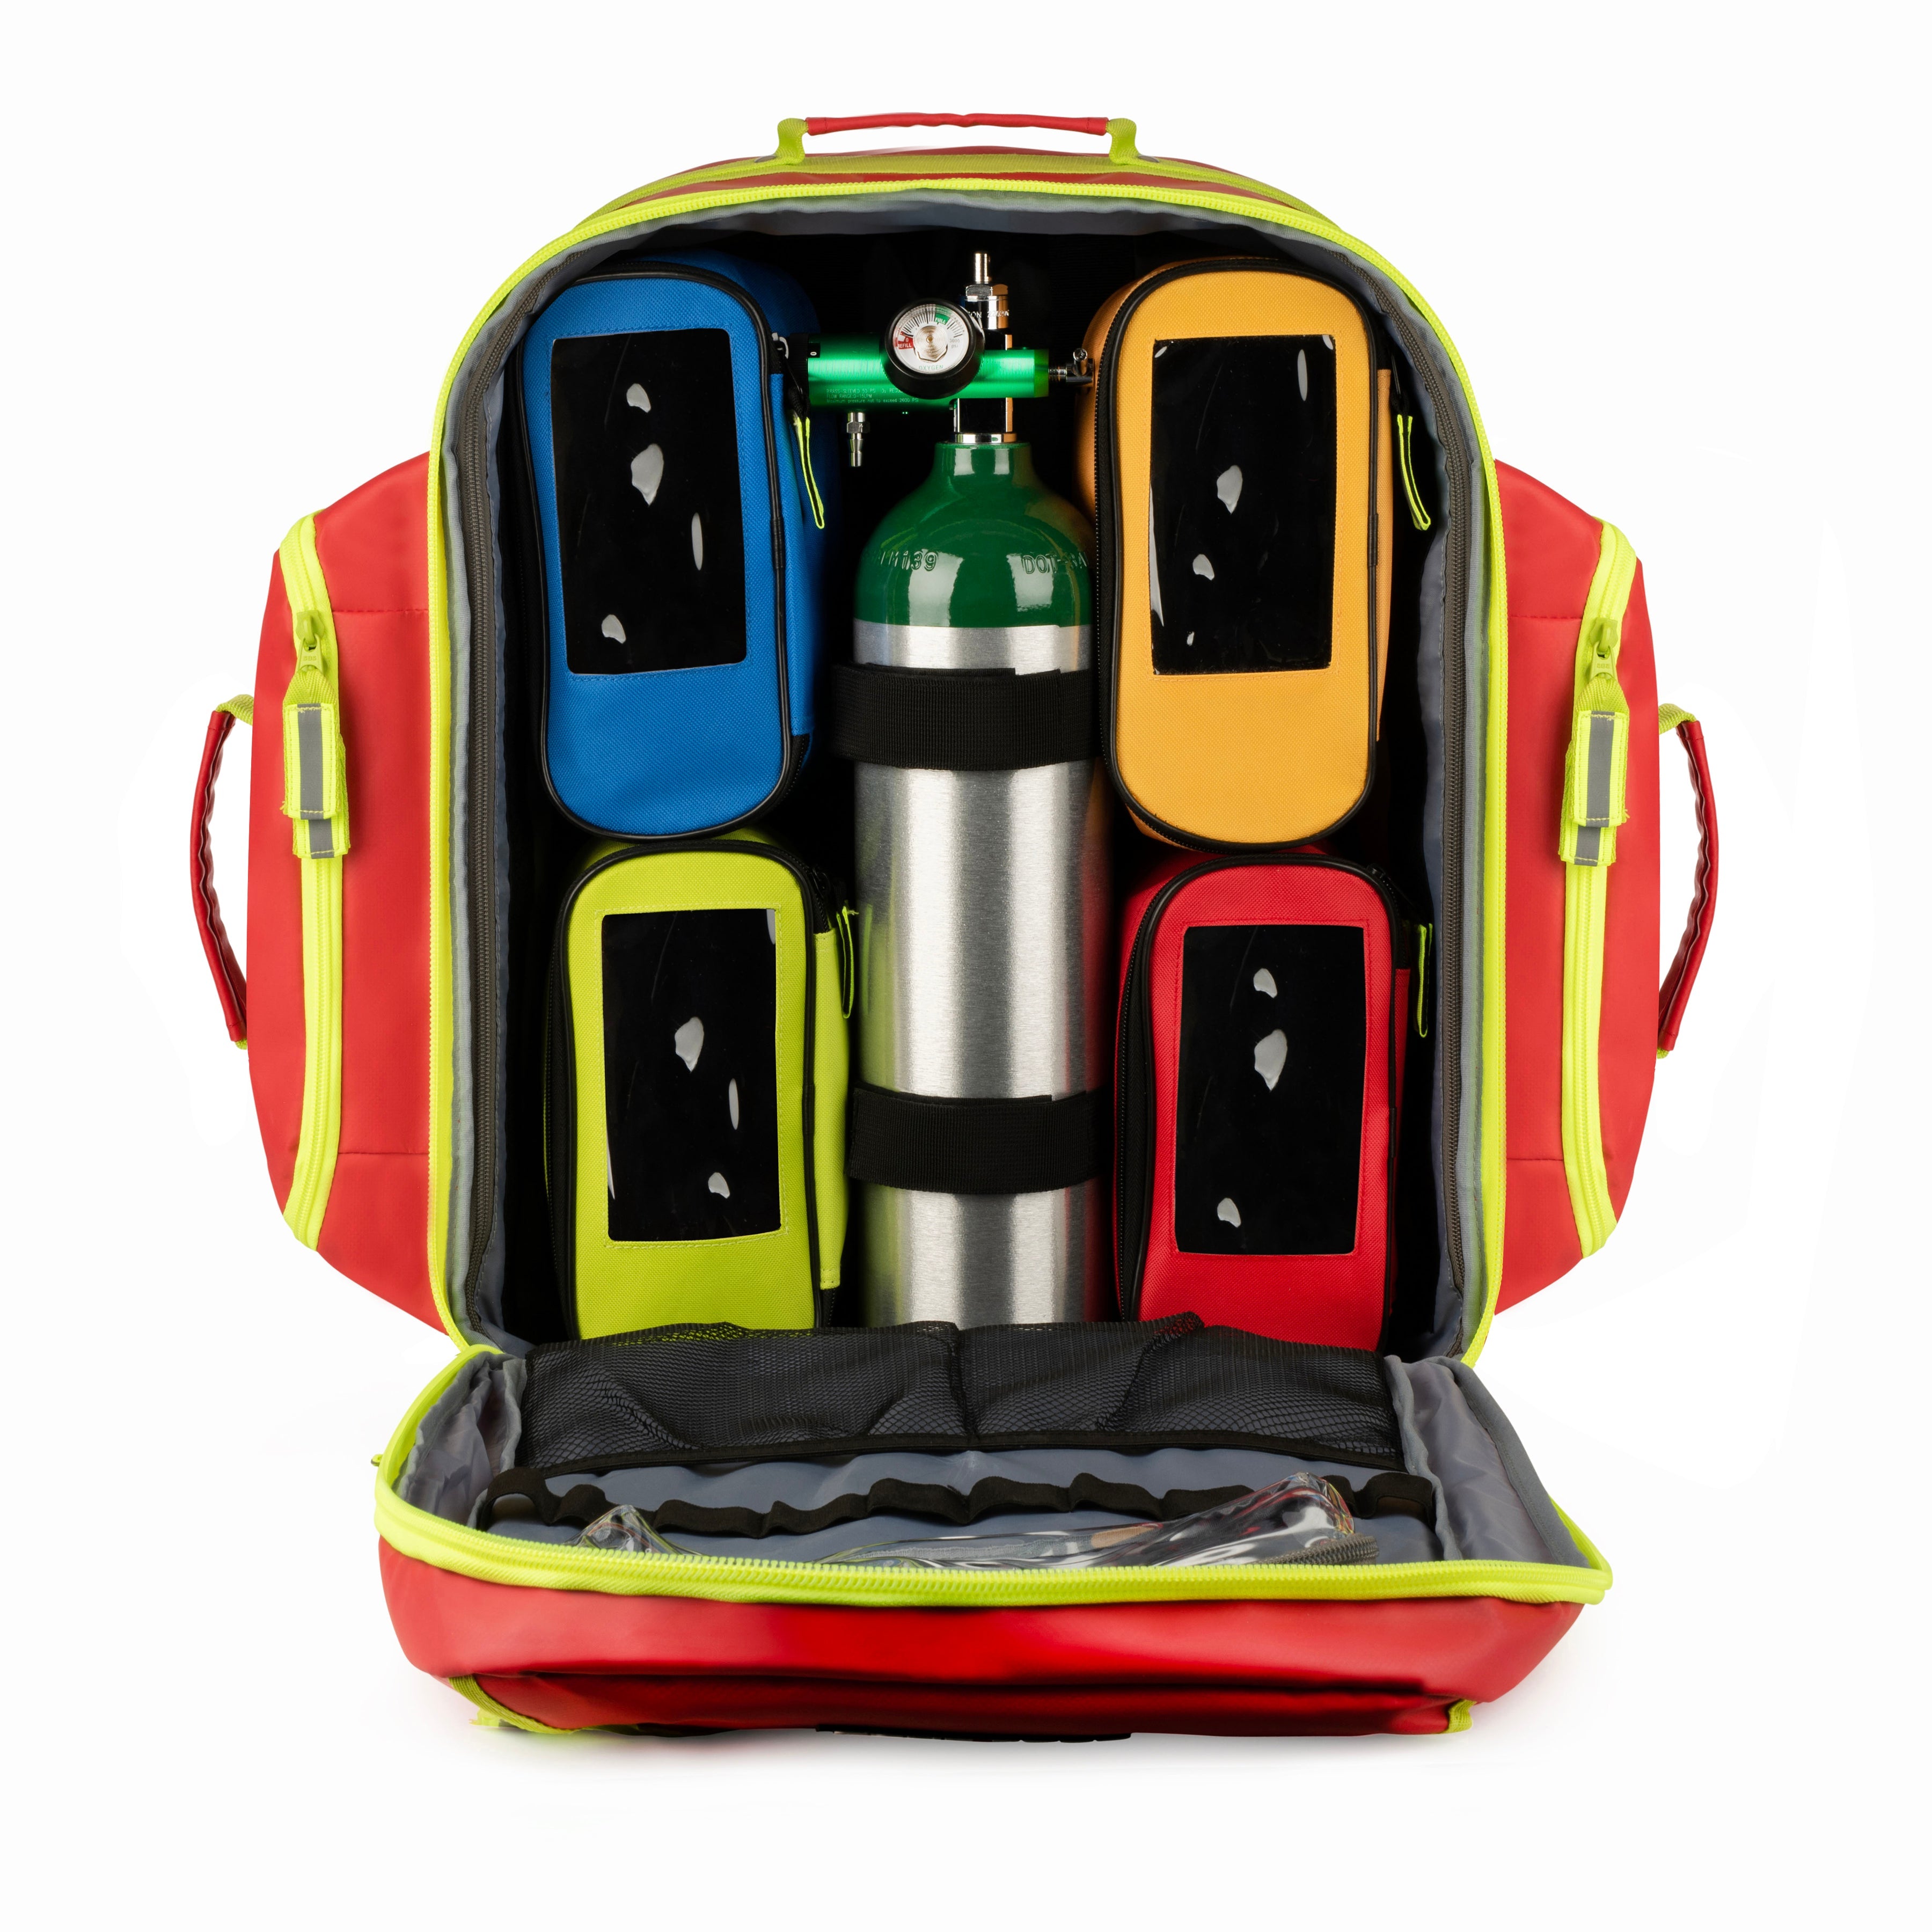 Scherber Ultimate First Responder Trauma O2 Backpack